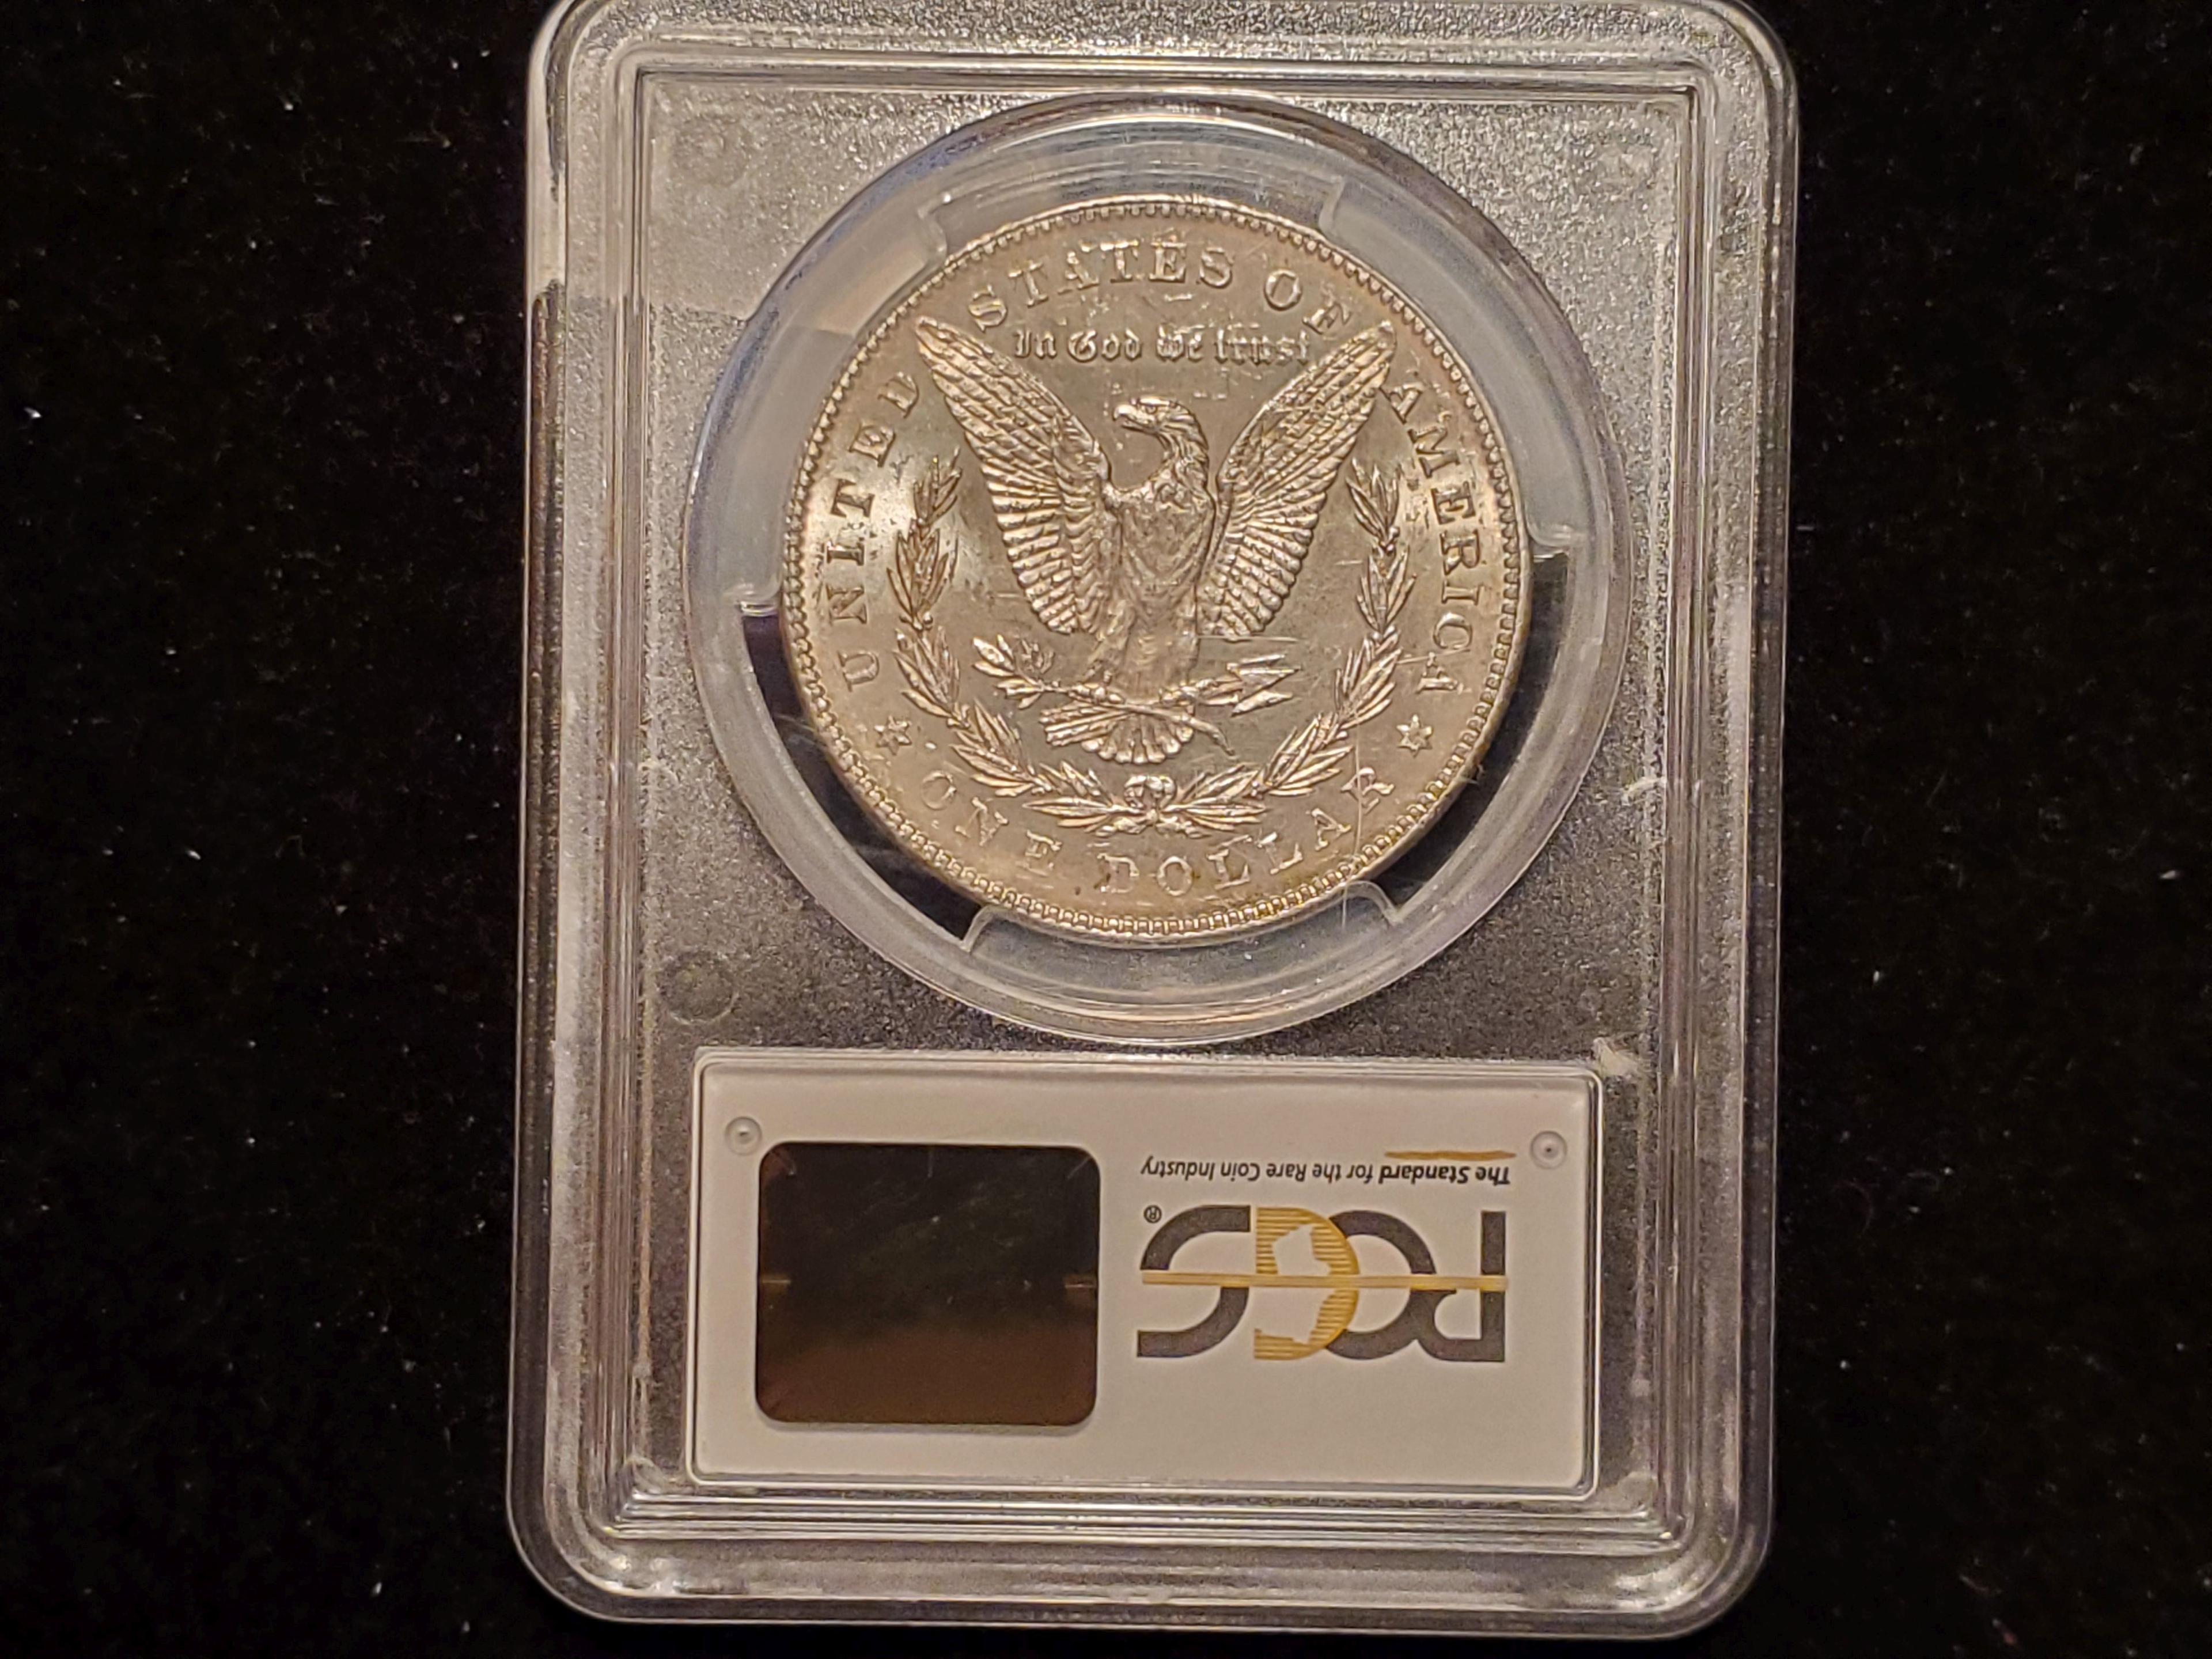 PCGS 1878 7TFC Rev 78 Morgan Dollar in Mint State 64